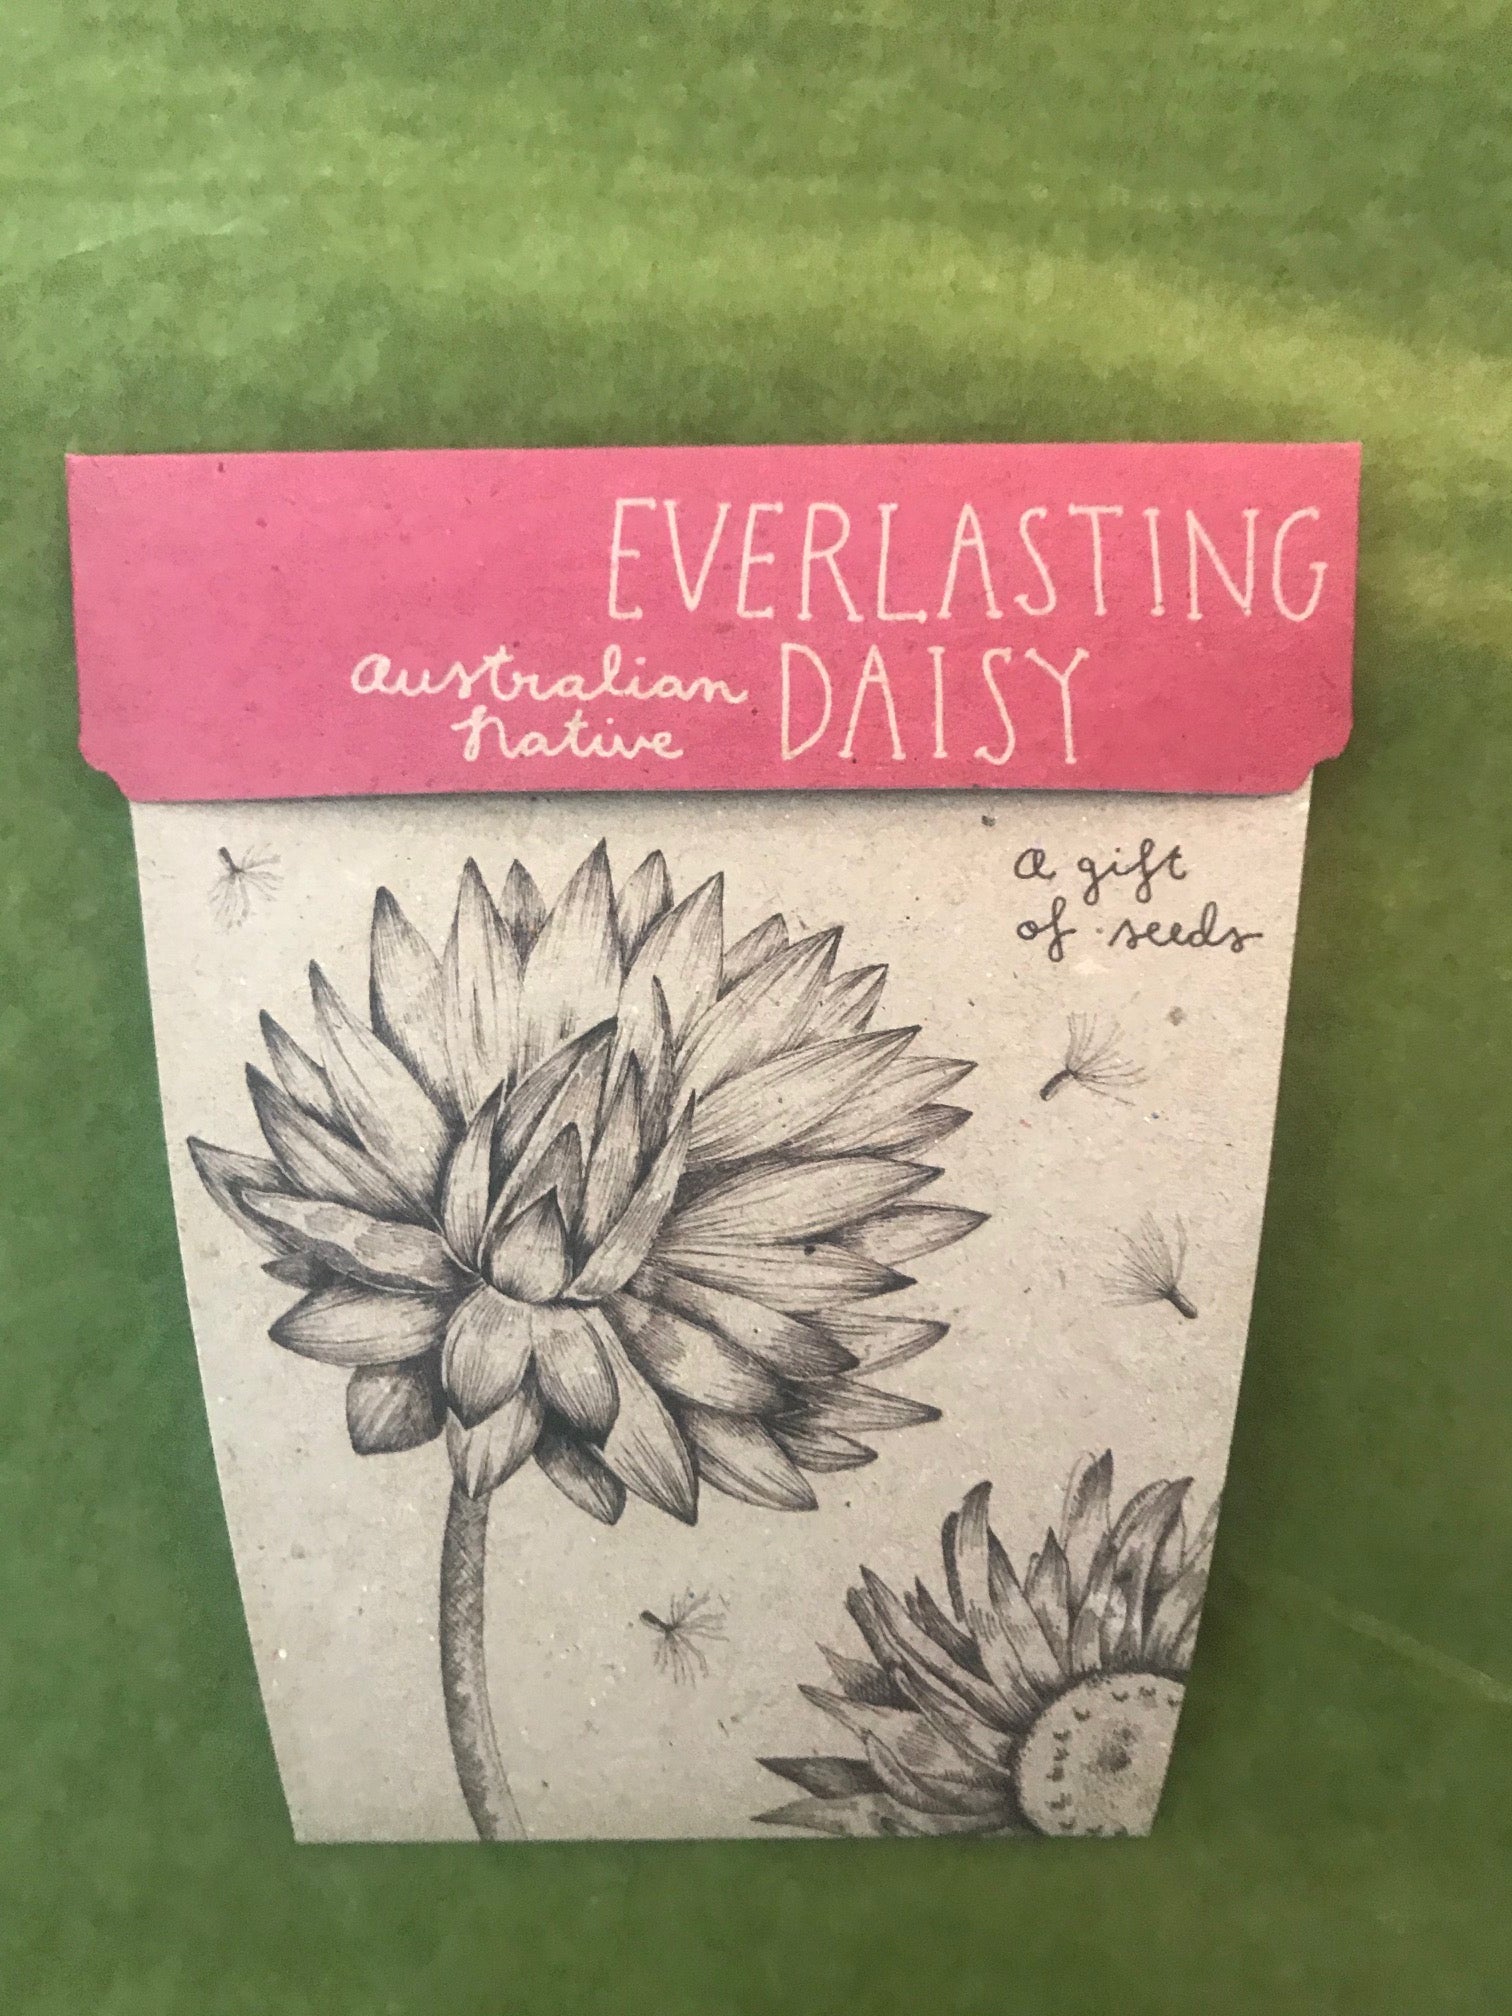 Sow n sow Gift Card Everlasting Daisy  Australian Native - Gaudy & Prim